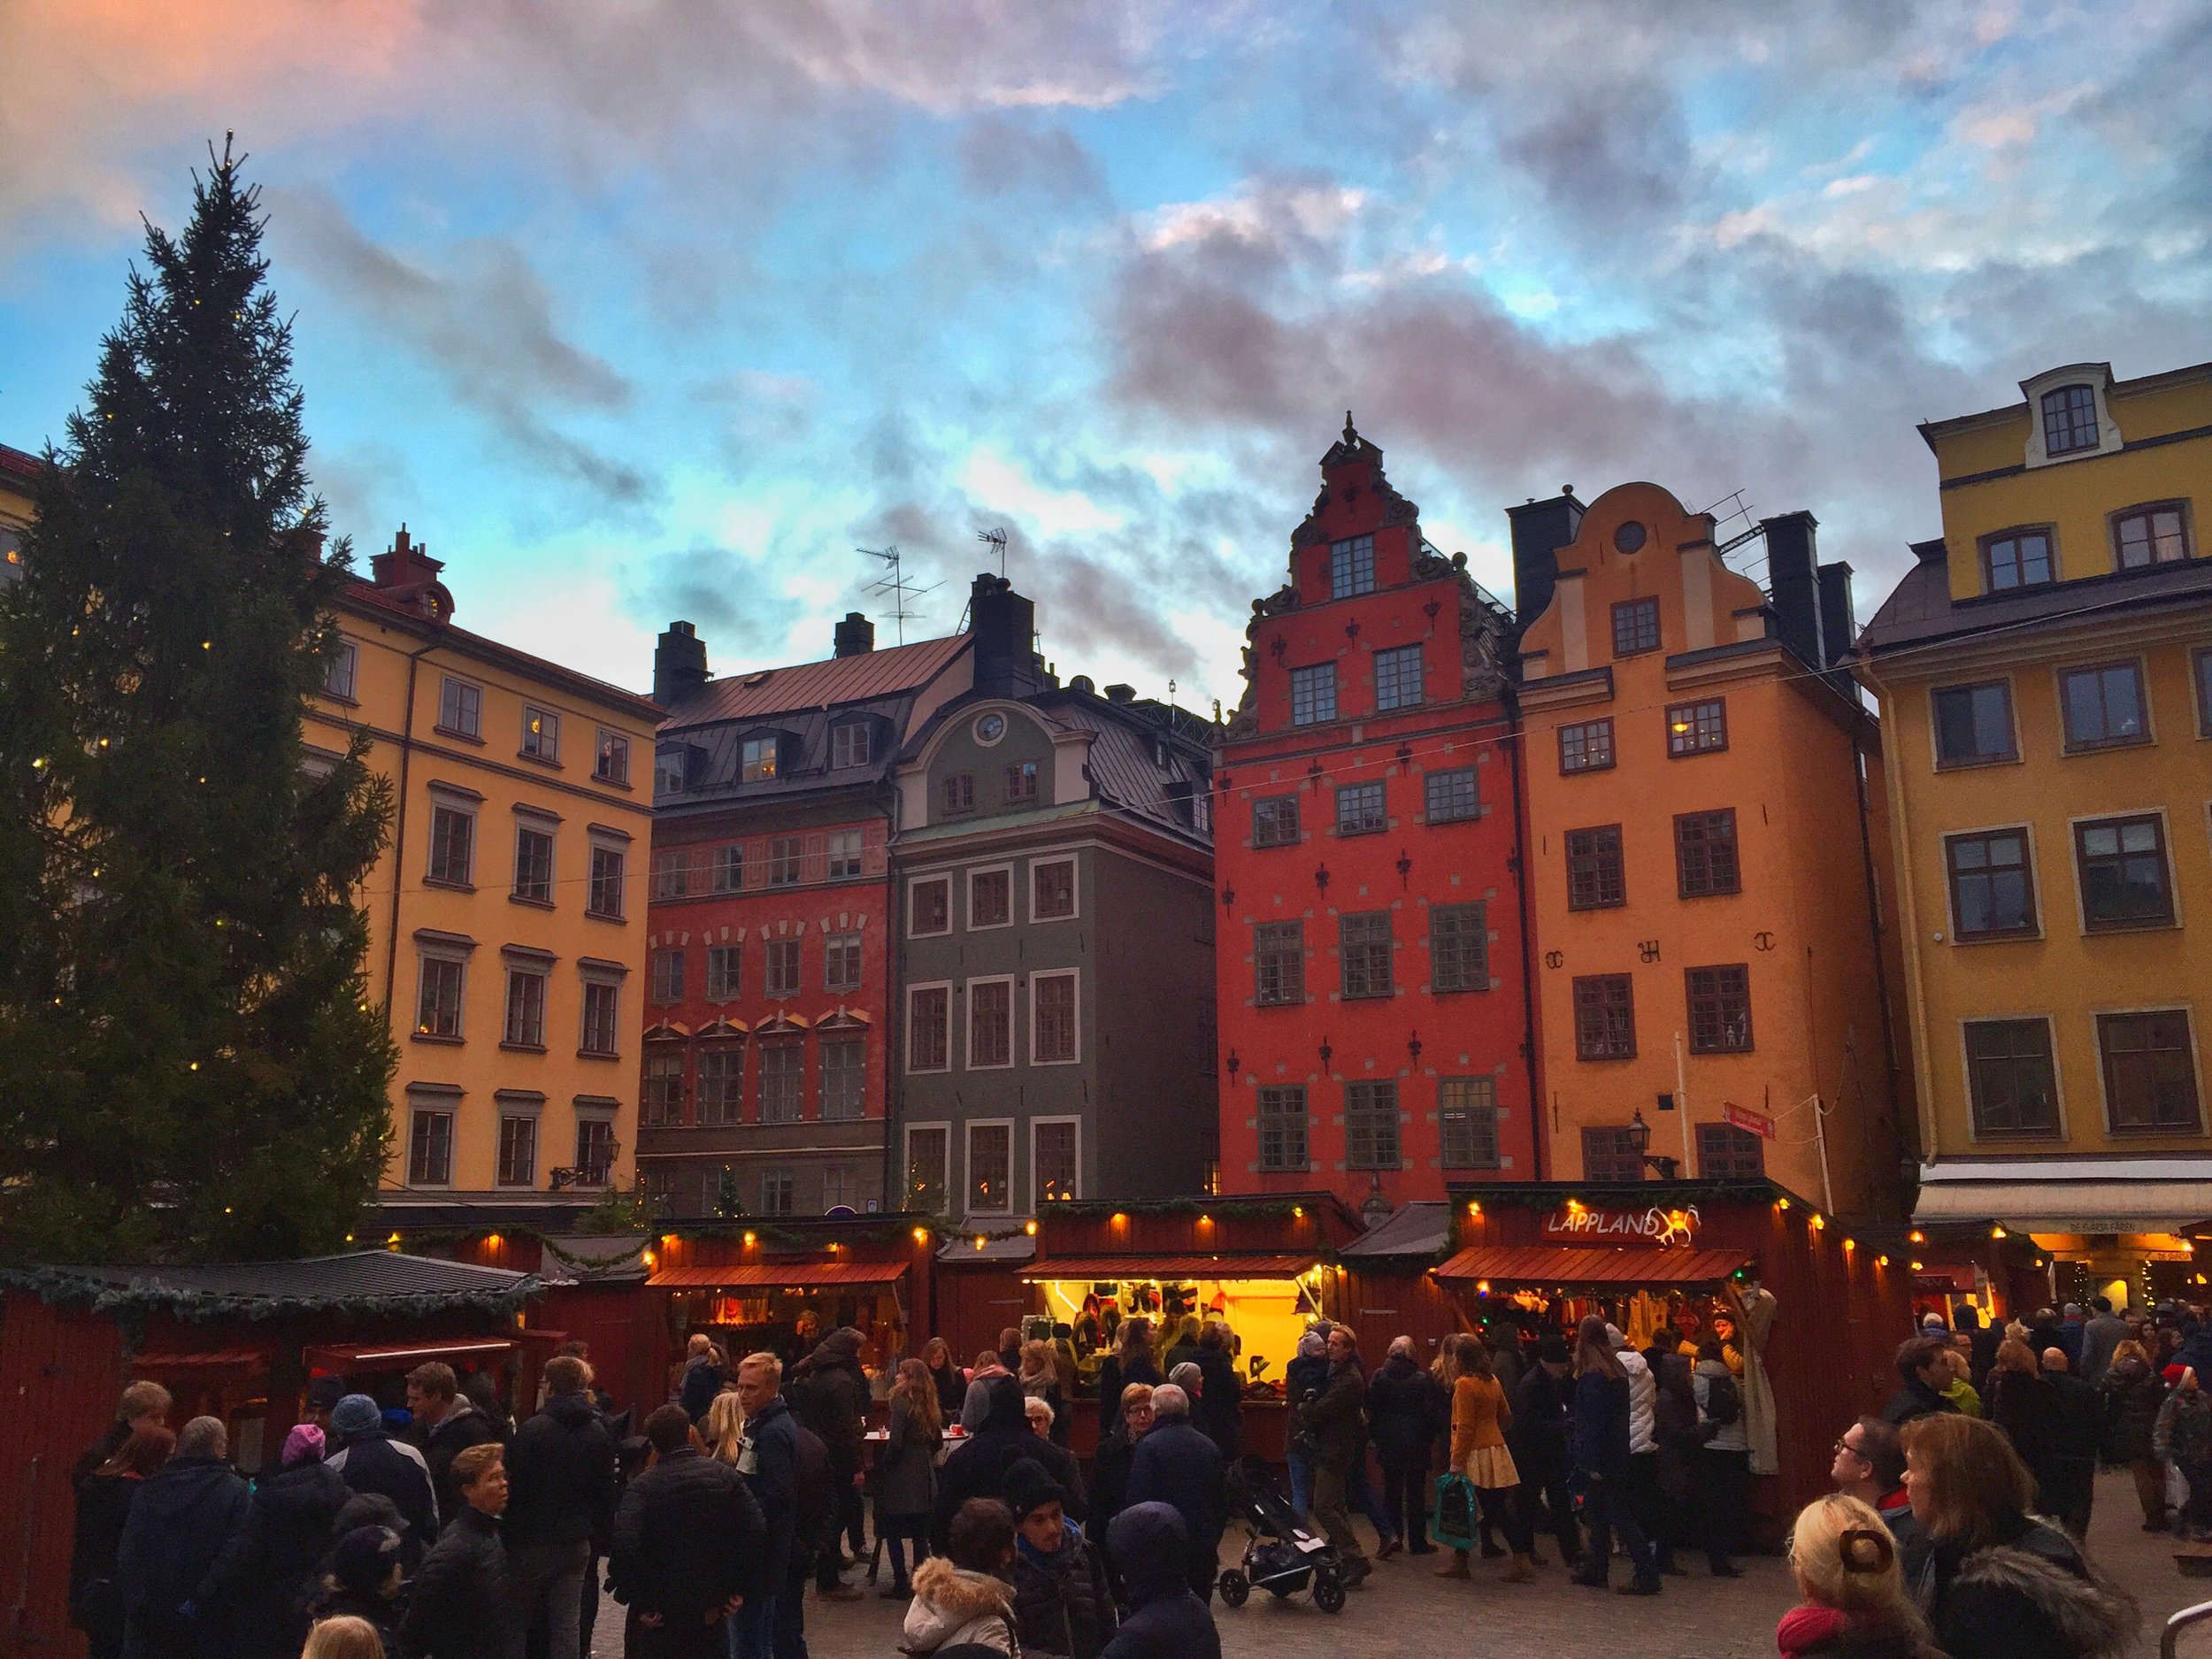 Stockholm Christmas market